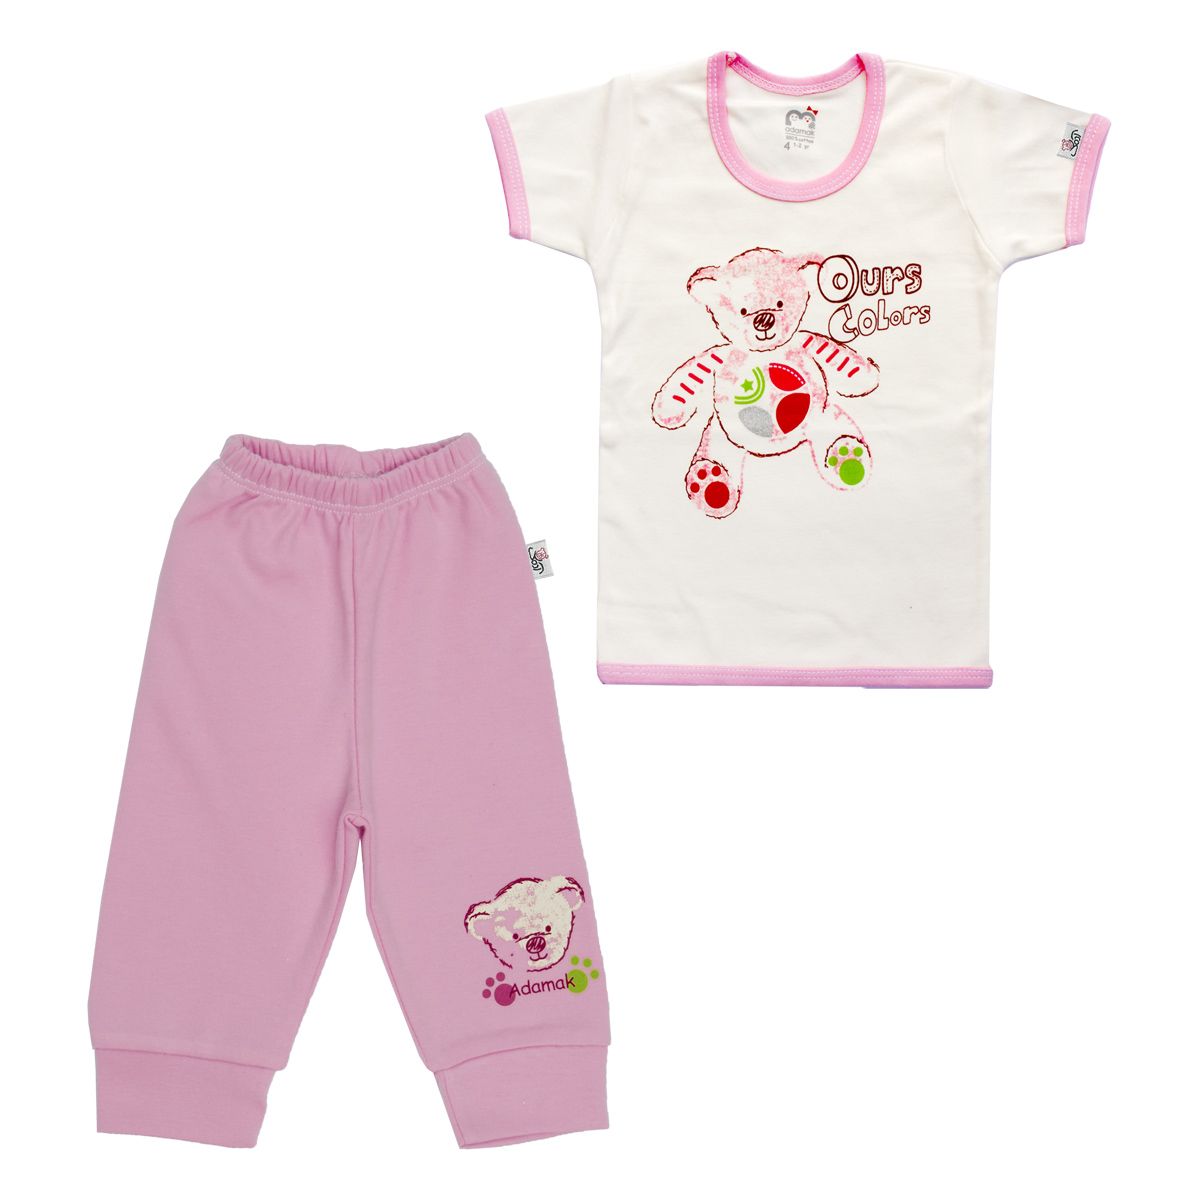 ست تی شرت و شلوار نوزادی آدمک طرح تدی کد 153132-2 -  - 2